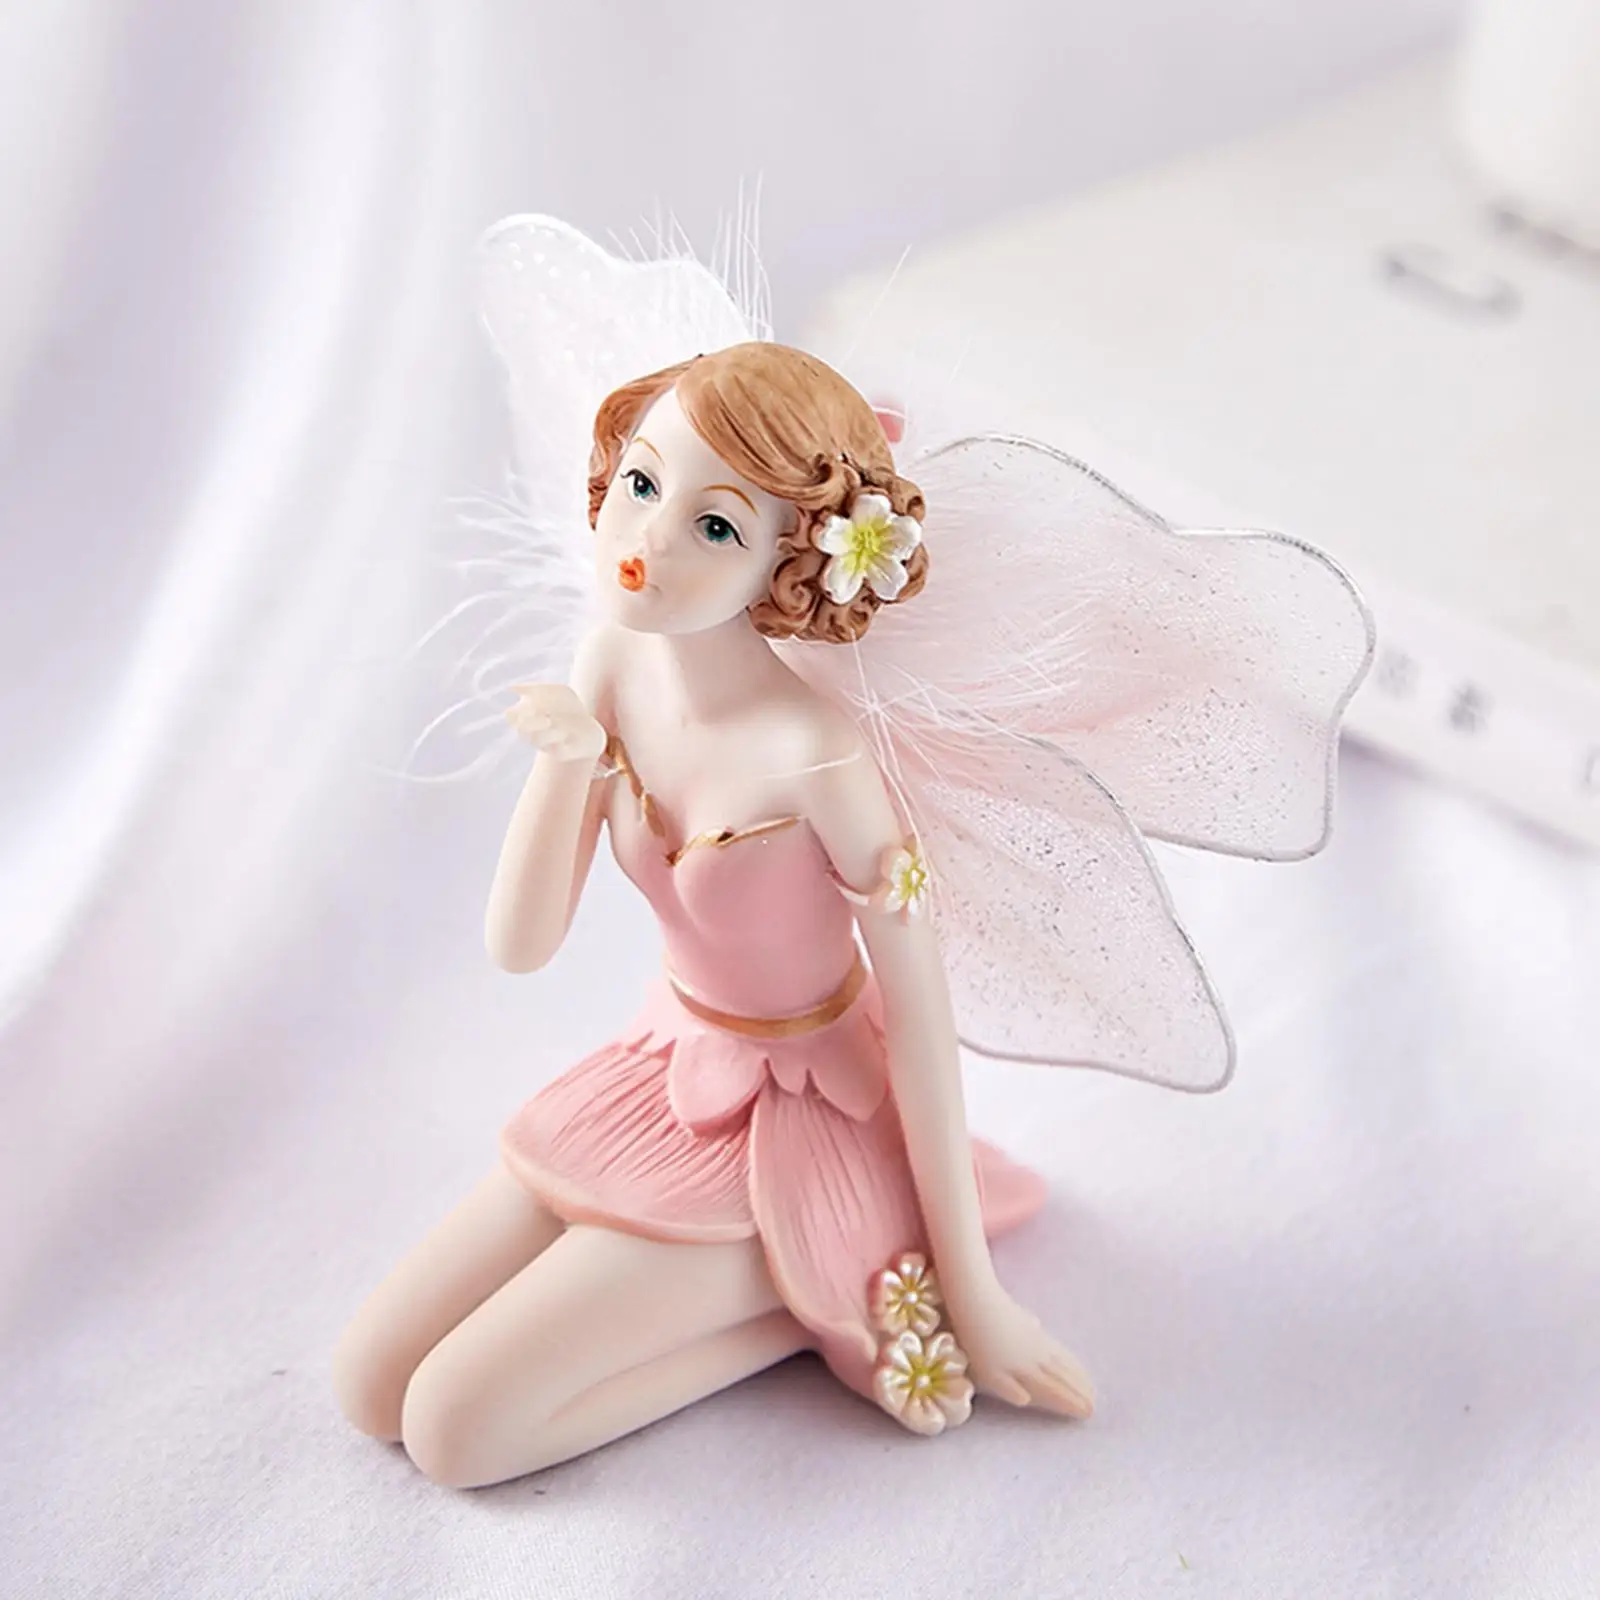 Miniature Flower Fairy Statue Handmade Small Creative Elf Girls Decorative Resin Ornaments for Home Decor Living Room Tabletop